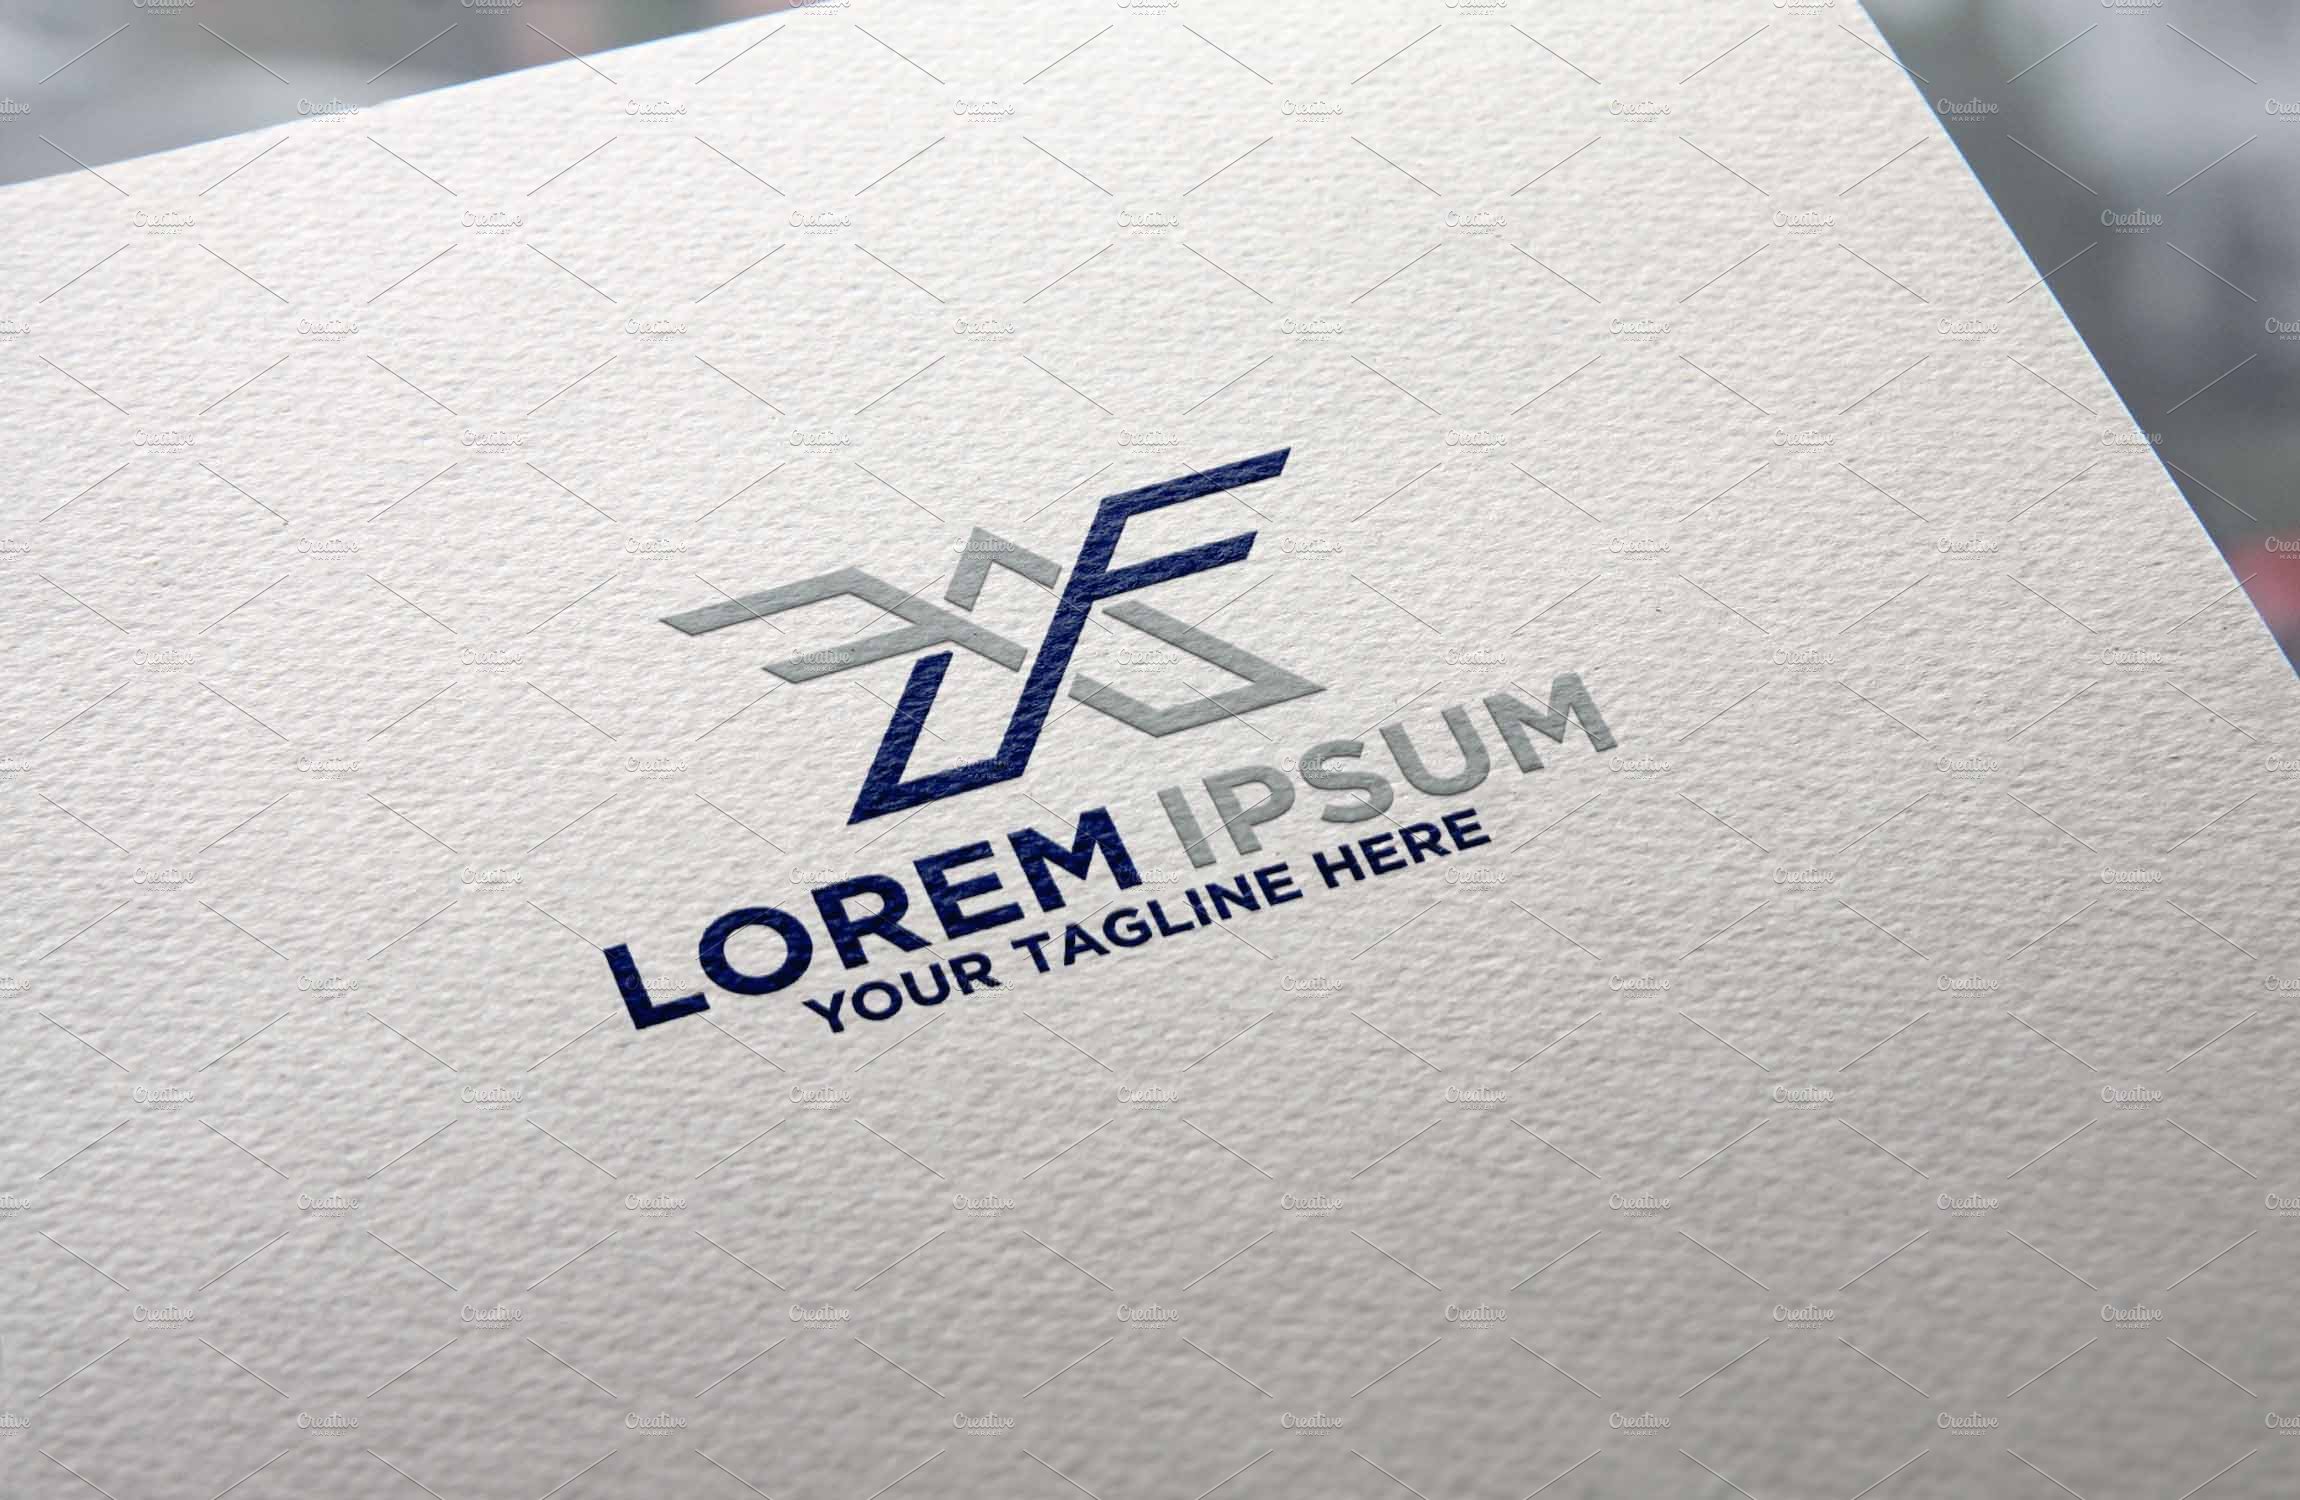 Letter FF, Business purpose logo des cover image.